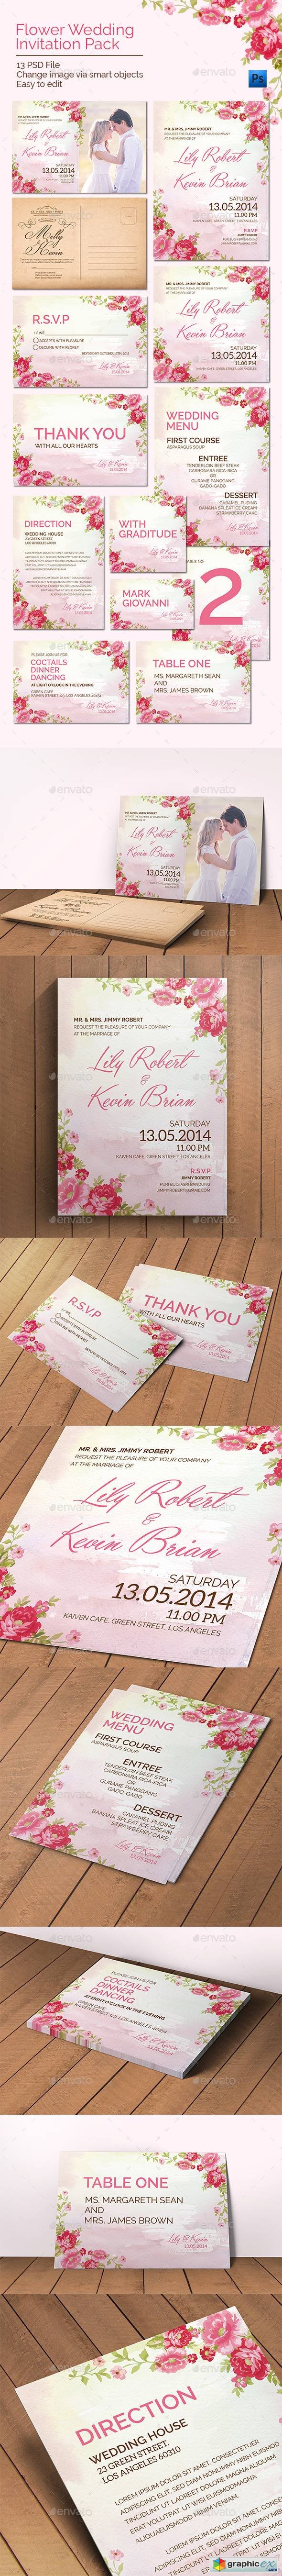 Flower Wedding Invitation Pack